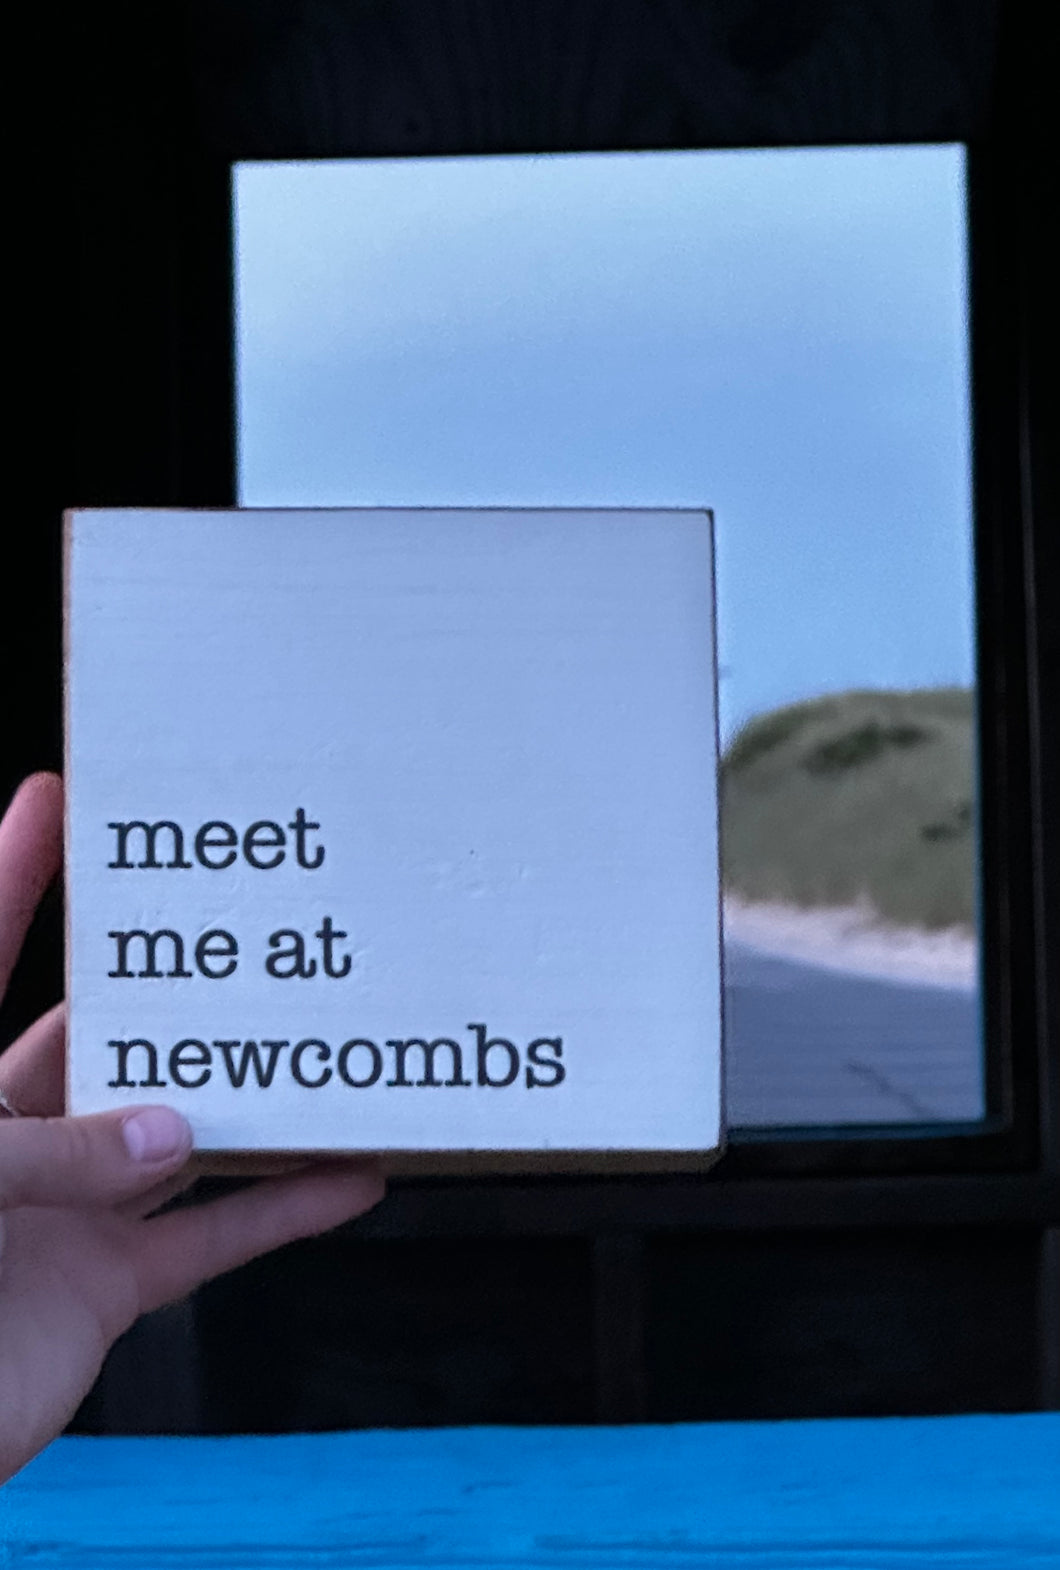 Meet me at Newcombs